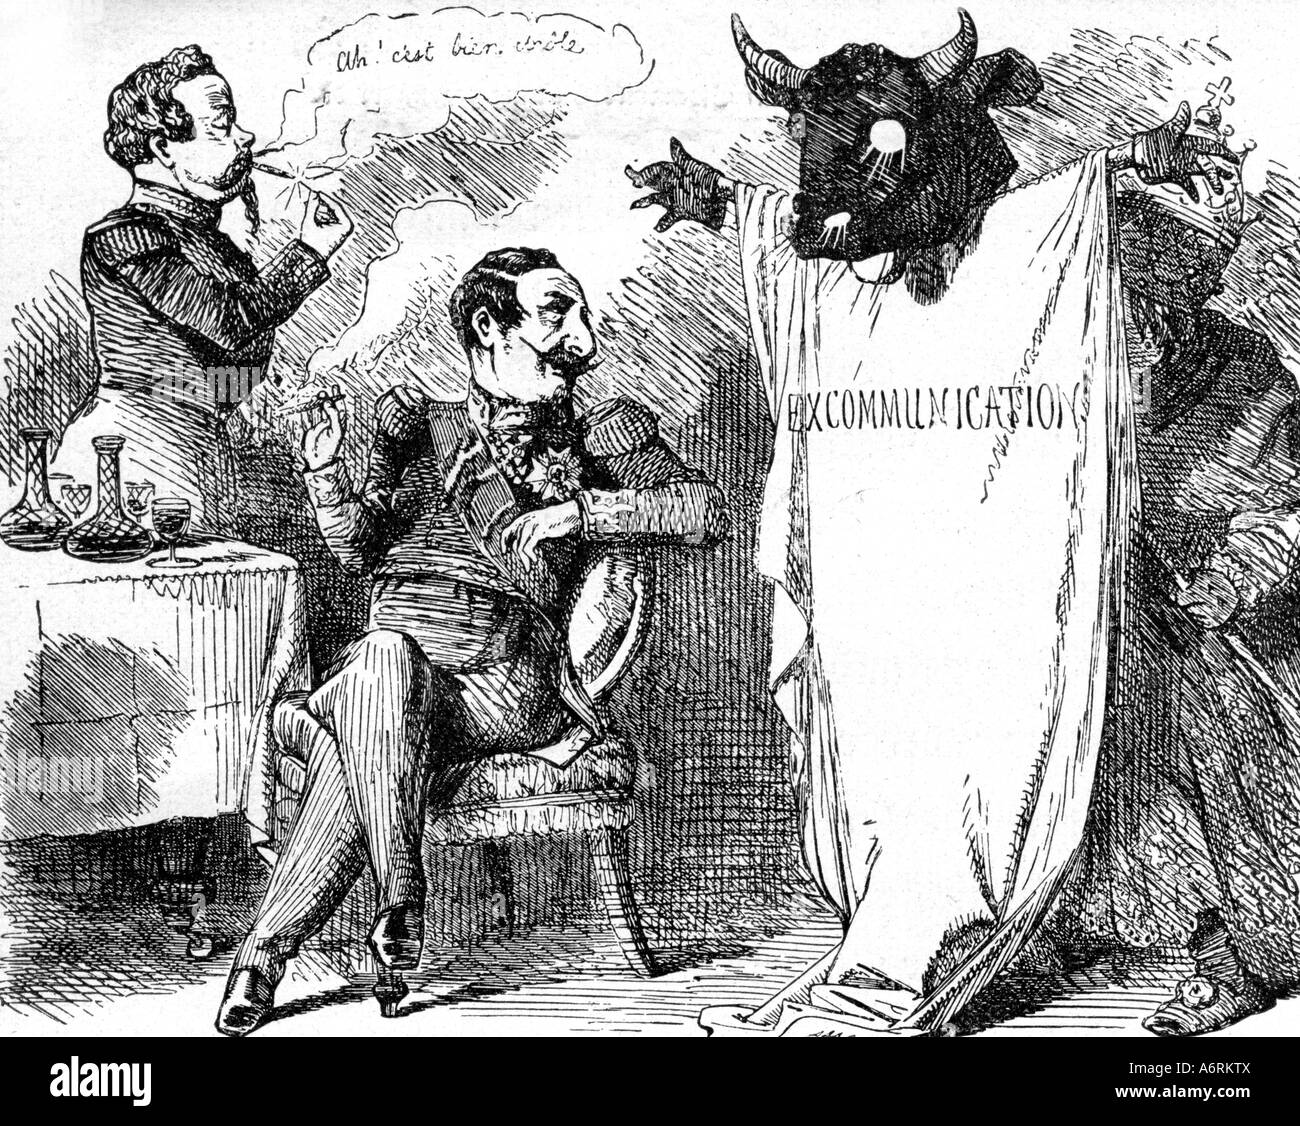 'Napoleon III., 20.4.1808 - 9.1.1873, Emperor of France 2.12.1852 - 2.9.1870, caricature, 'Mumbo Jumbo', the pope threatens wi Stock Photo